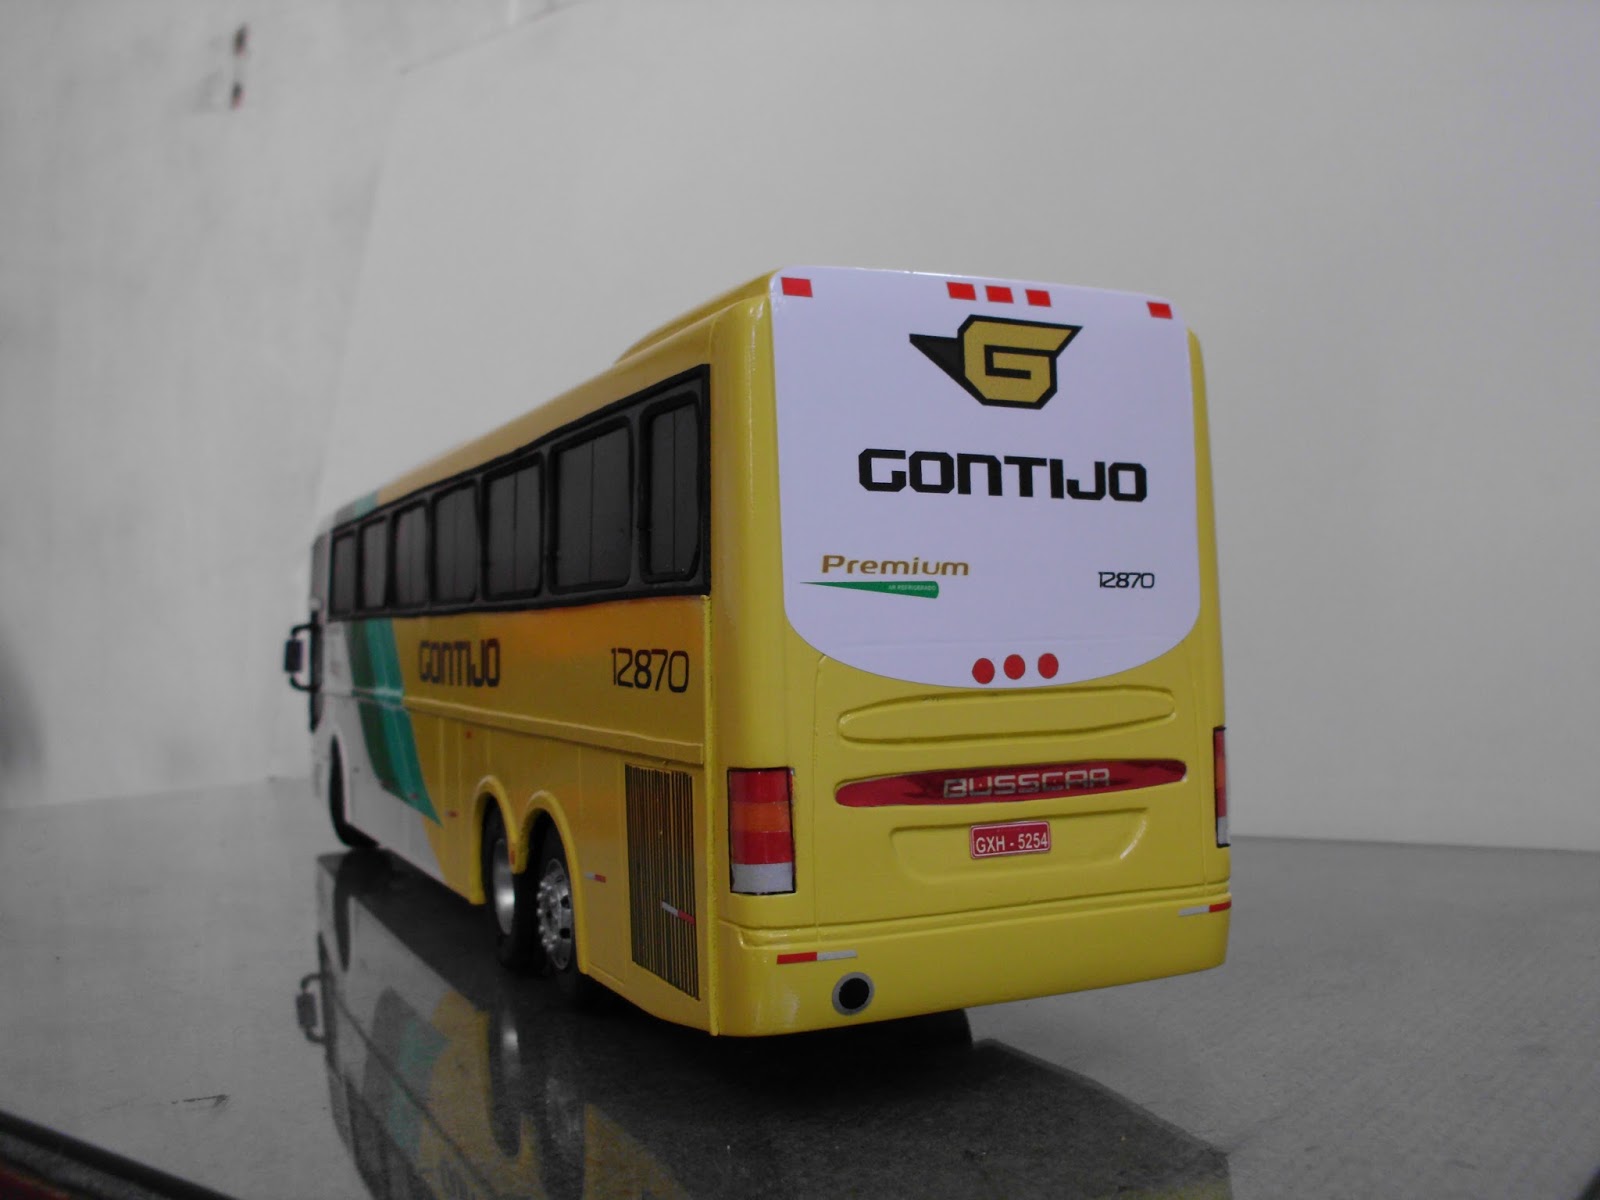 How to get to AeC in Juazeiro Do Norte by Bus?